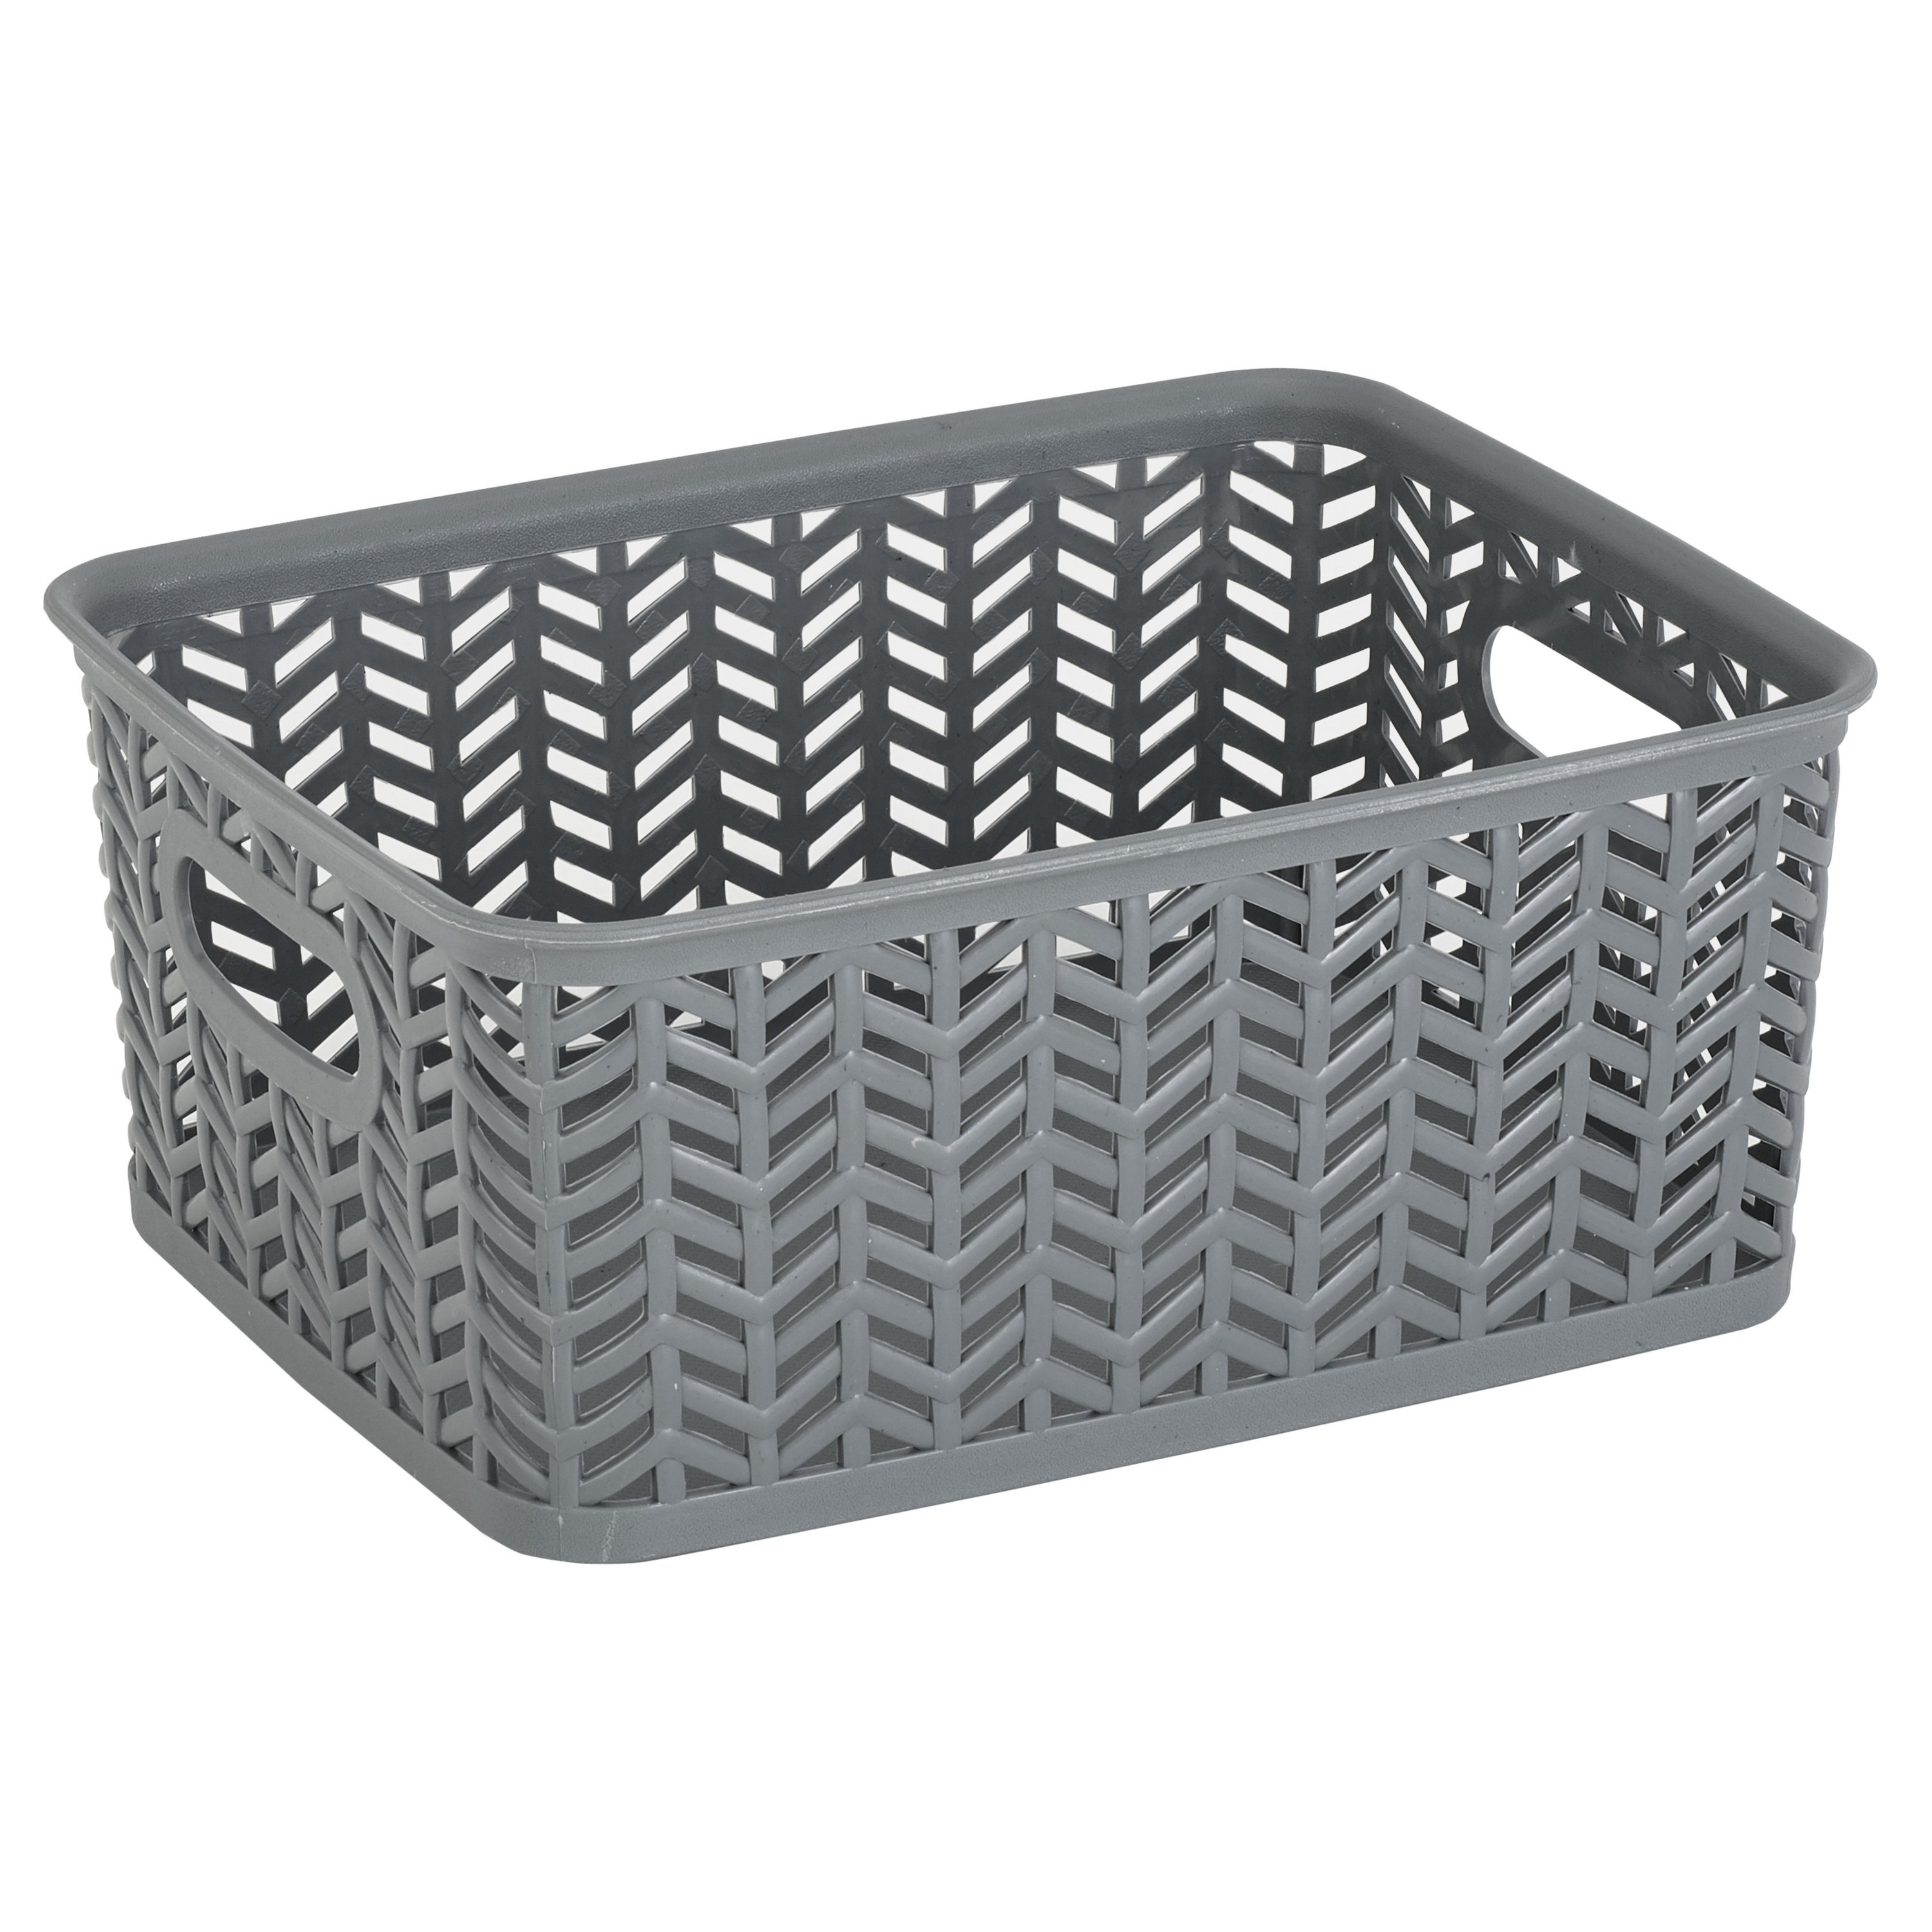 Simplify Small Plastic Herringbone Storage Basket in Gray - image 1 of 8